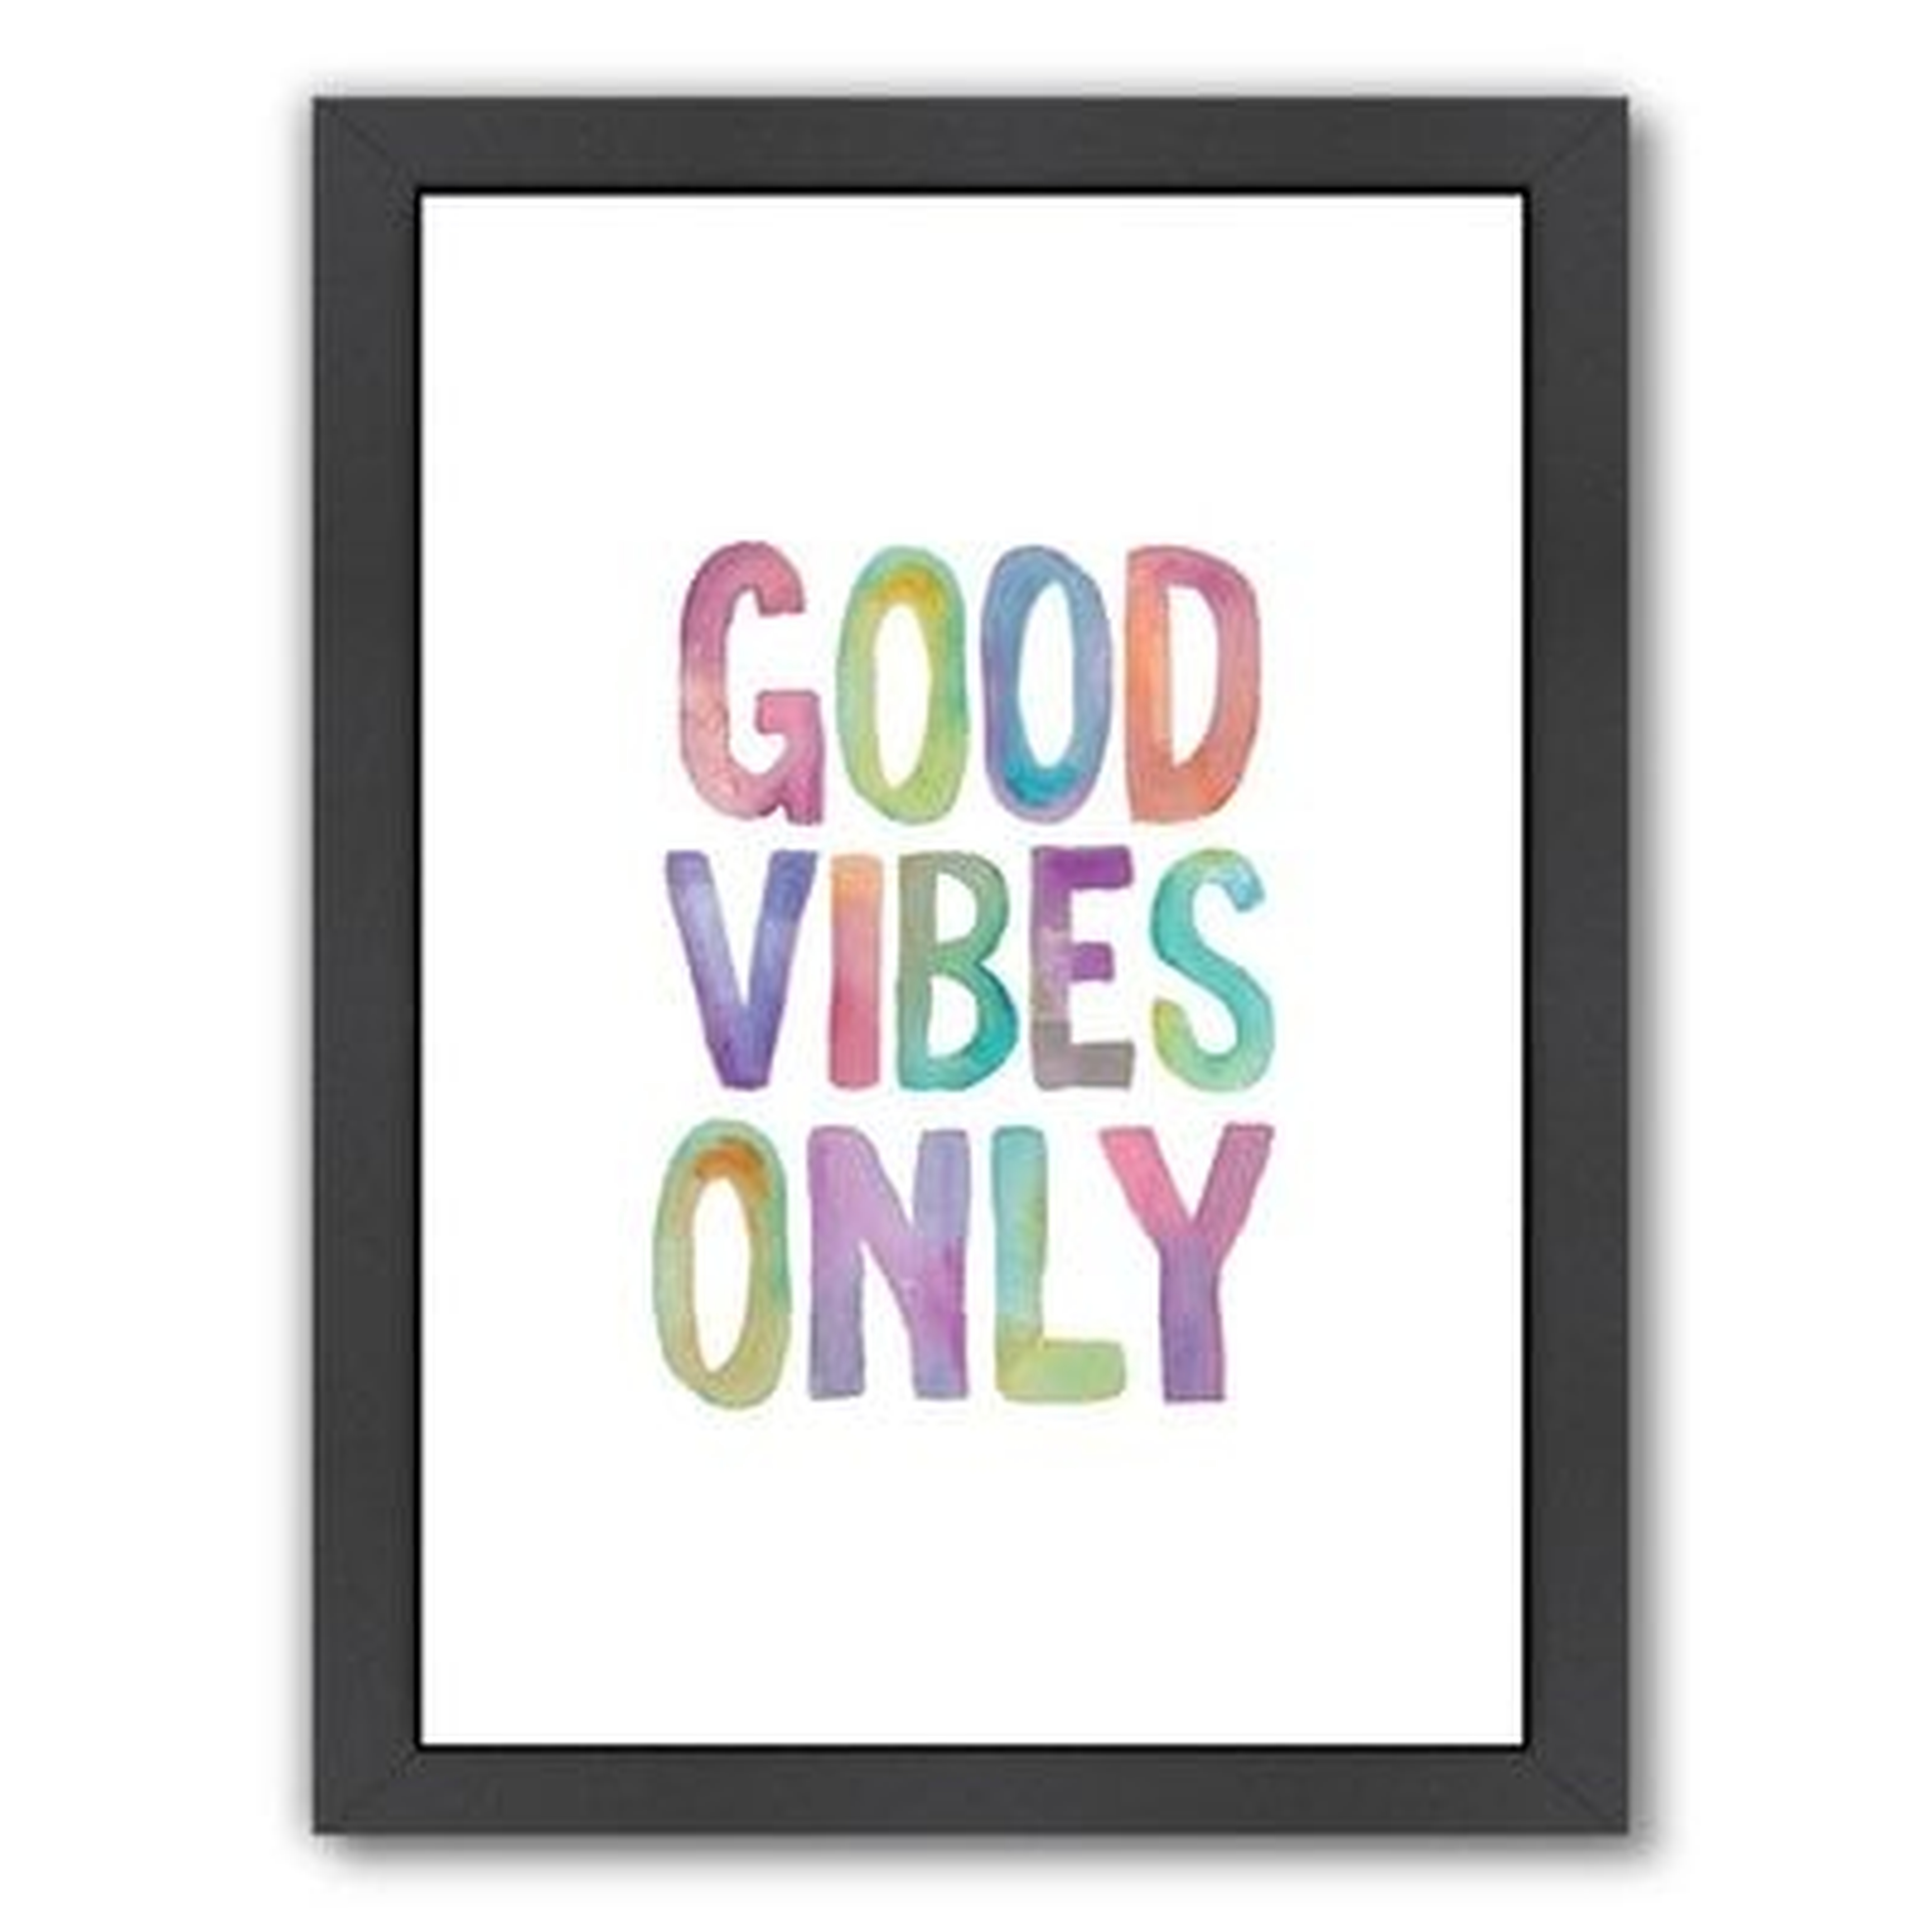 'Good Vibes Only' Watercolor Framed Textual Art - Wayfair